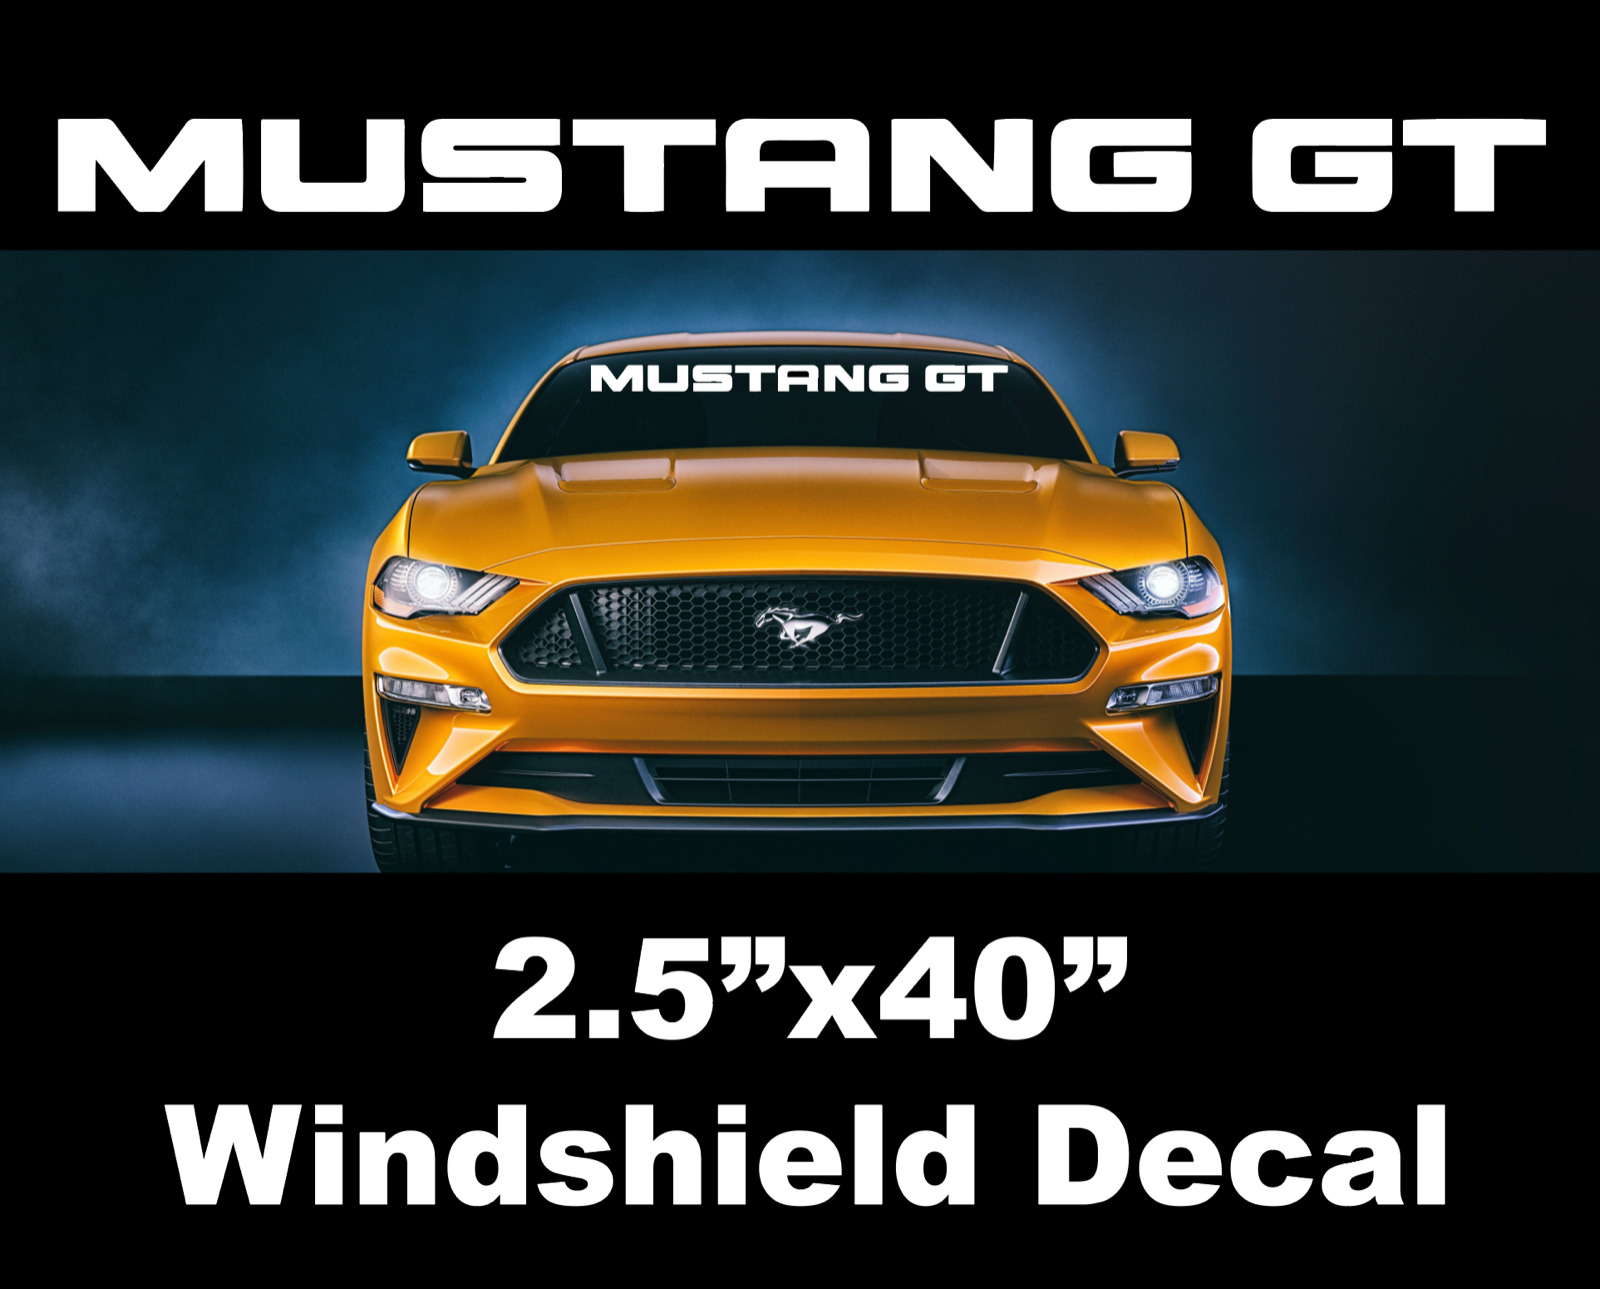 Ford Mustang Sport GT USDM windshield logo text car vinyl decal sticker NEW  348